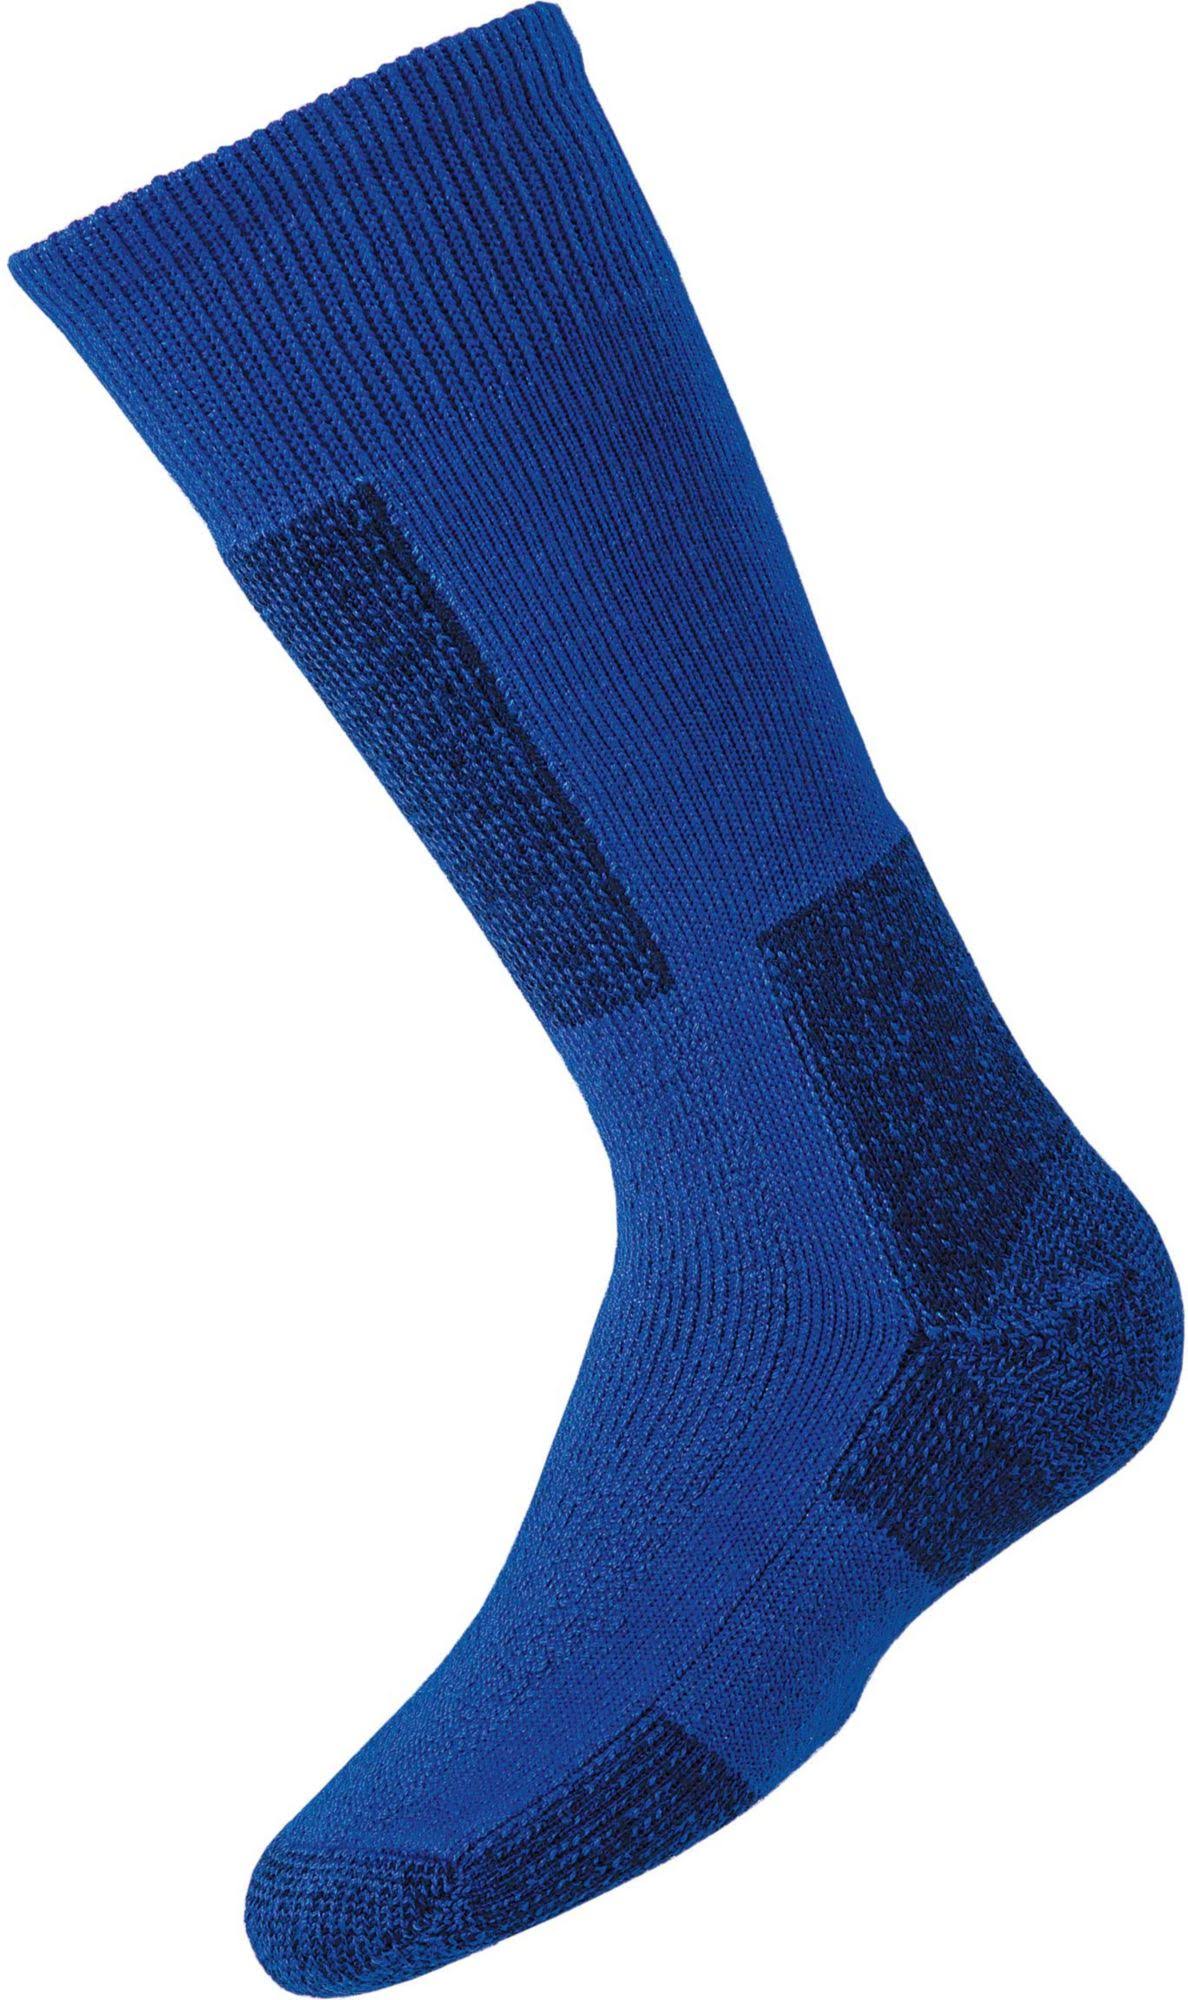 Thorlos Kids Ski Cushion Socks - Blue, Small